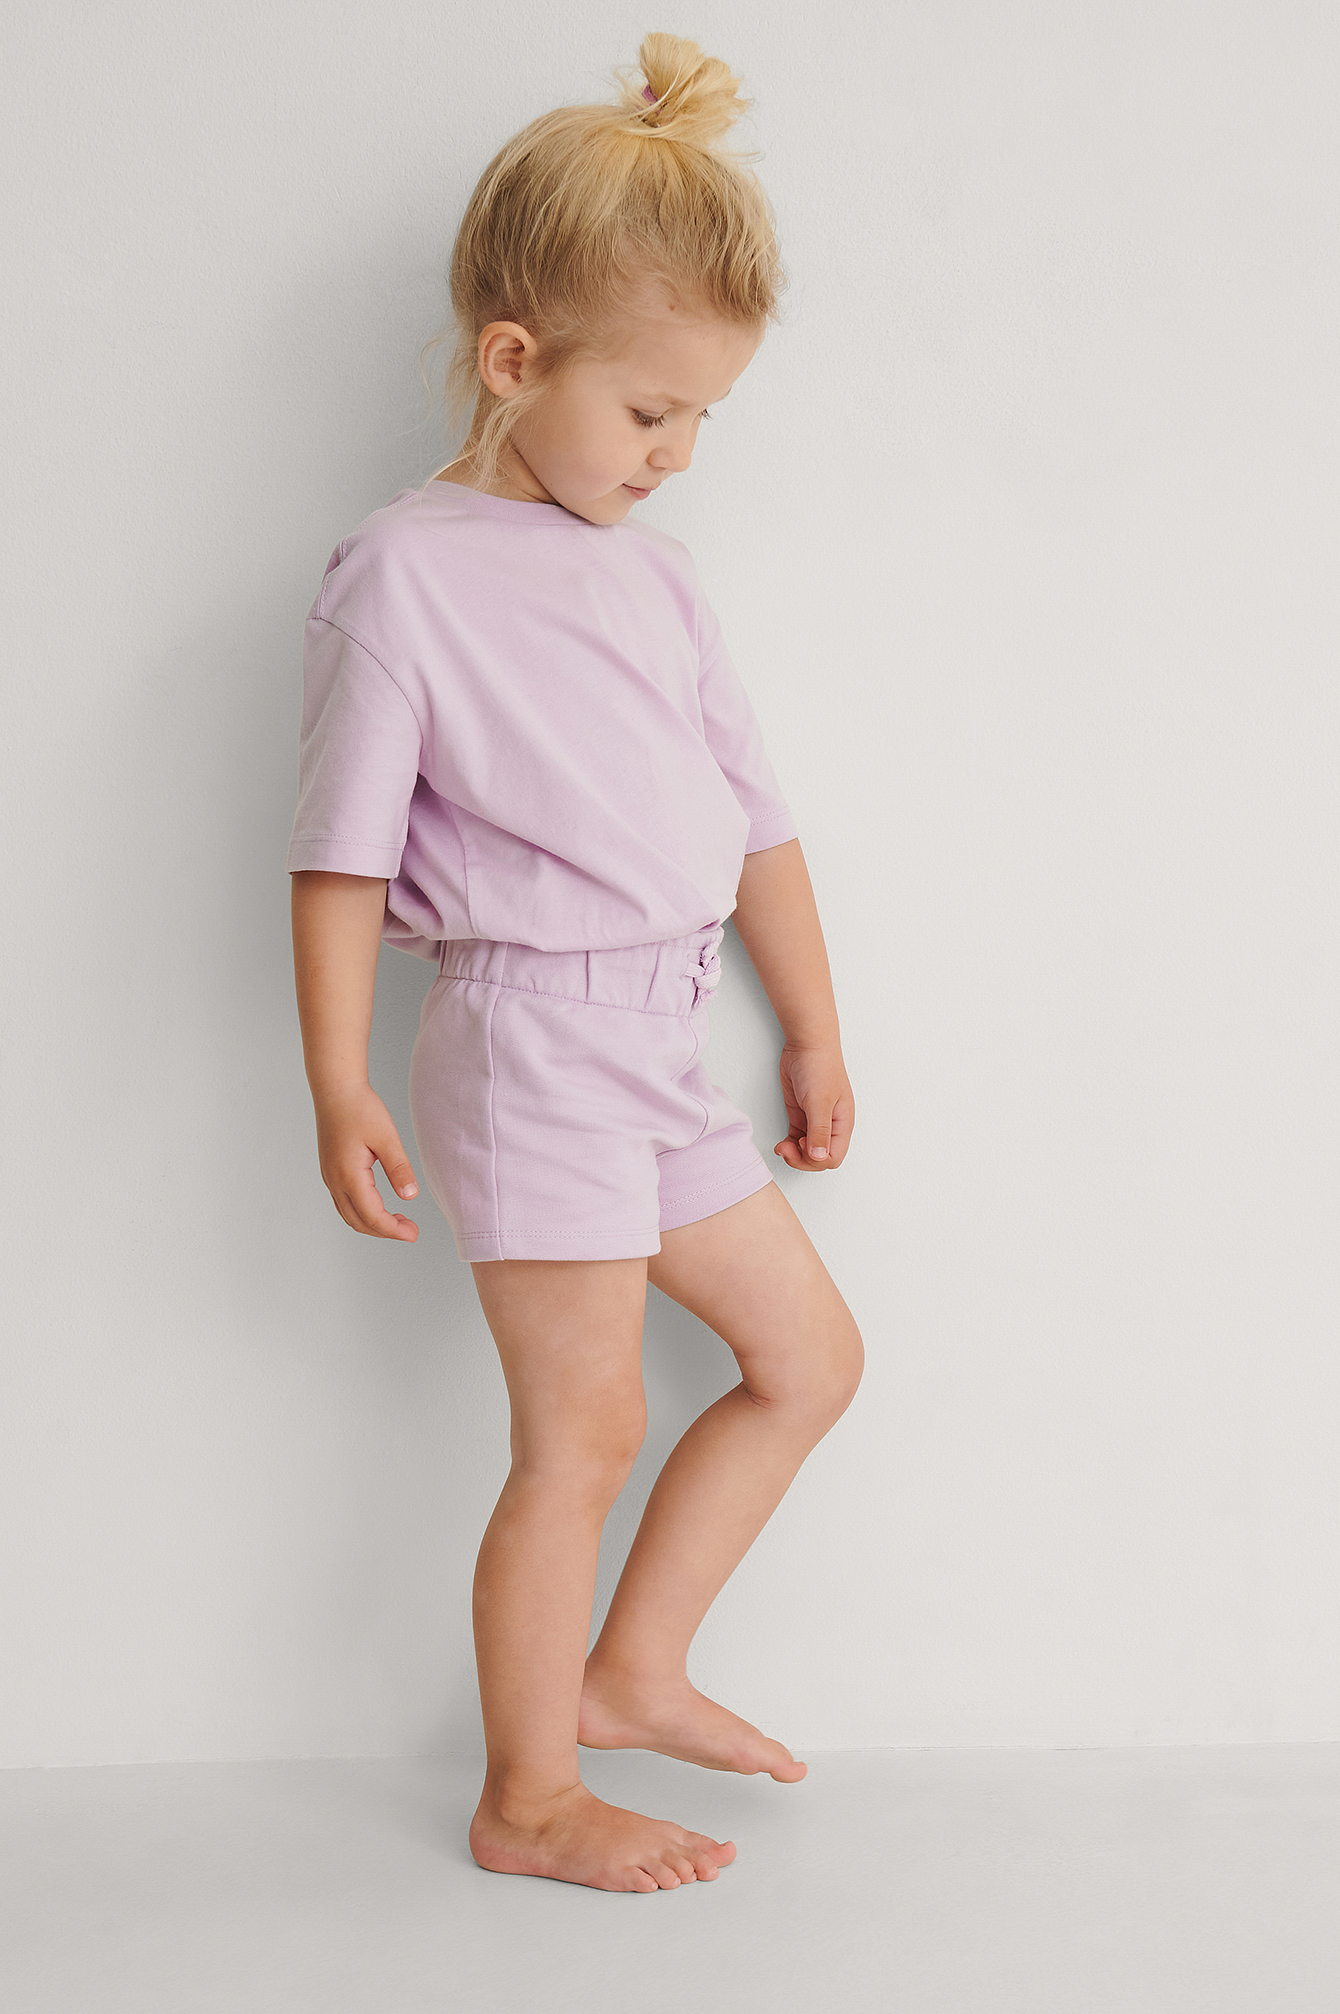 Violet Basic Short Jersey Shorts